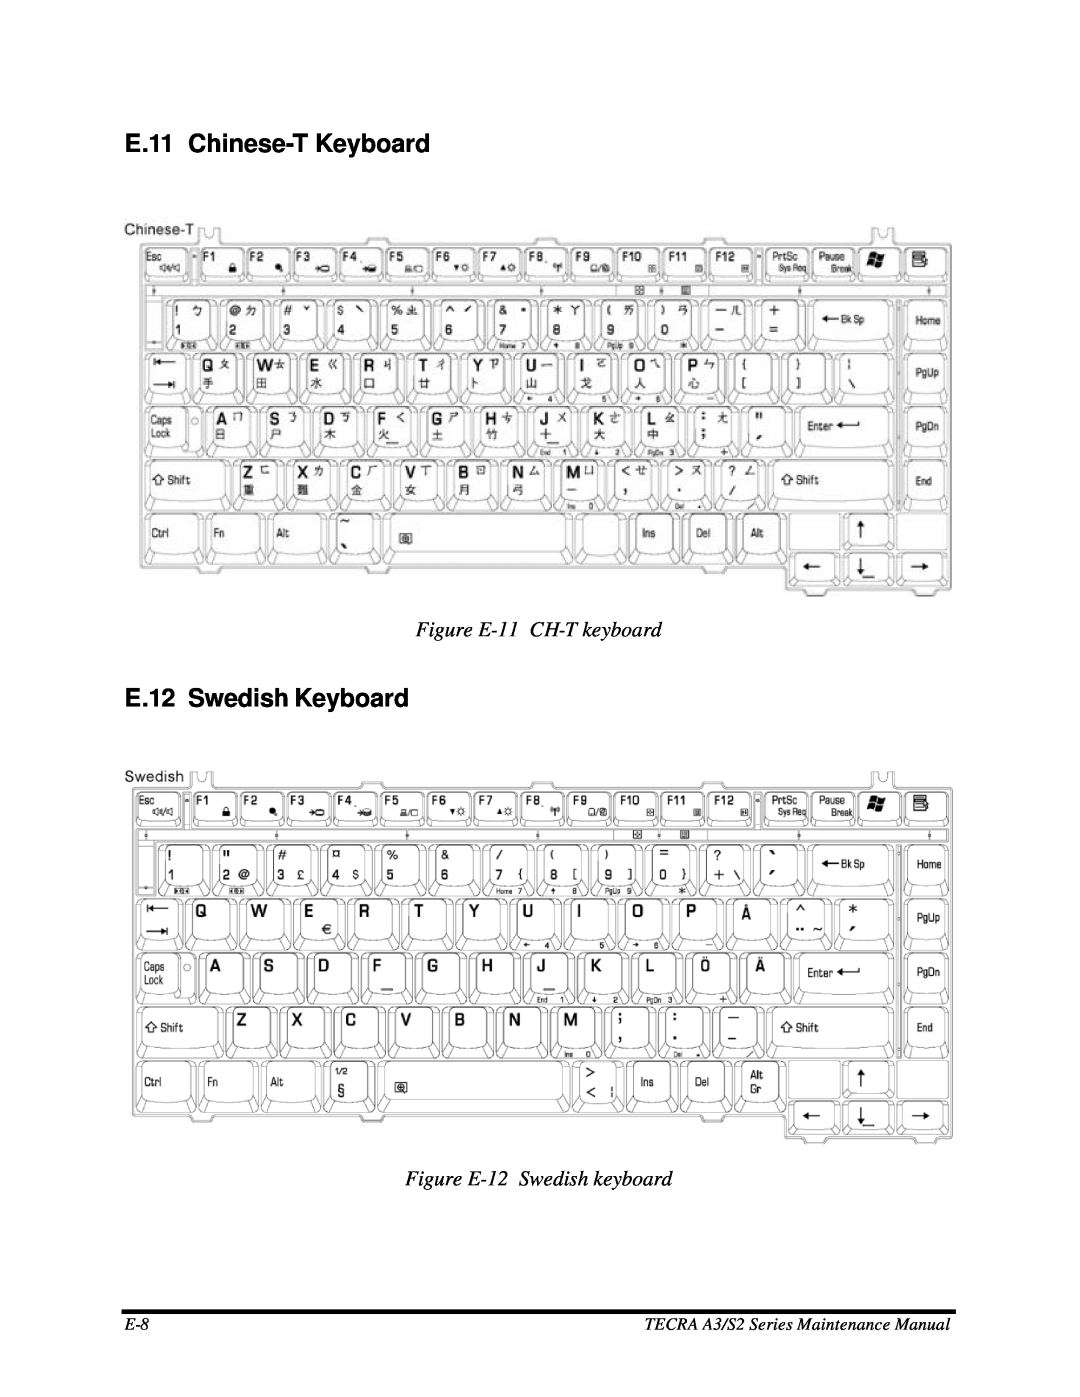 Toshiba S2 manual E.11 Chinese-T Keyboard, E.12 Swedish Keyboard, Figure E-11 CH-T keyboard, Figure E-12 Swedish keyboard 